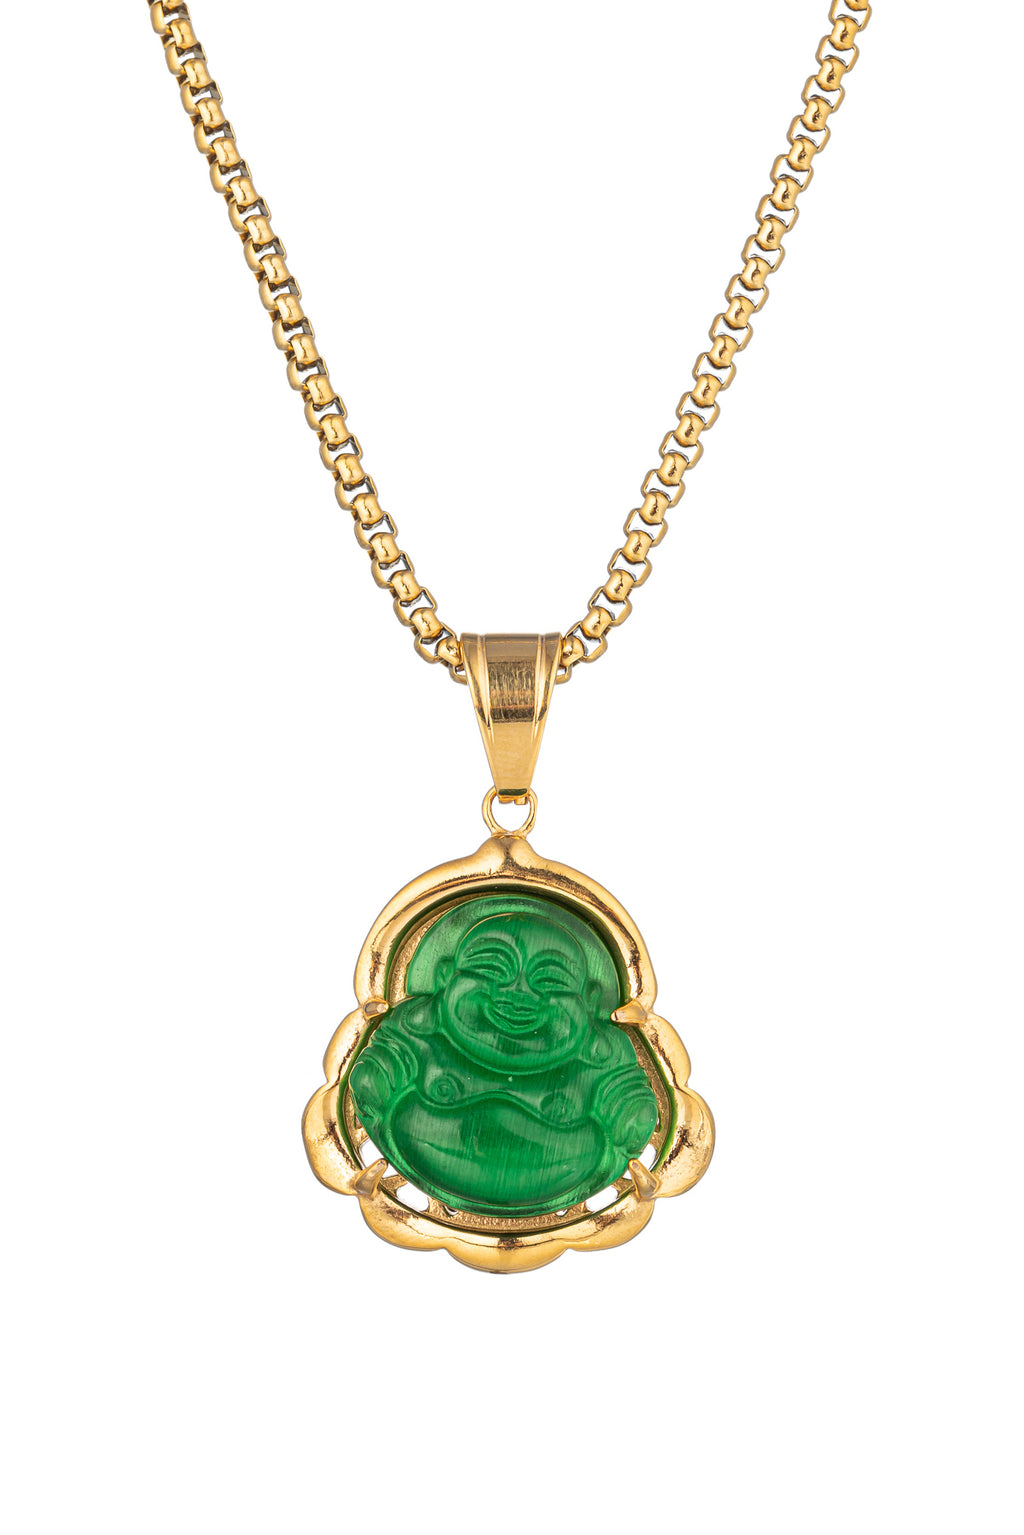 Gold tone titanium necklace with a green agate stone Buddha pendant.